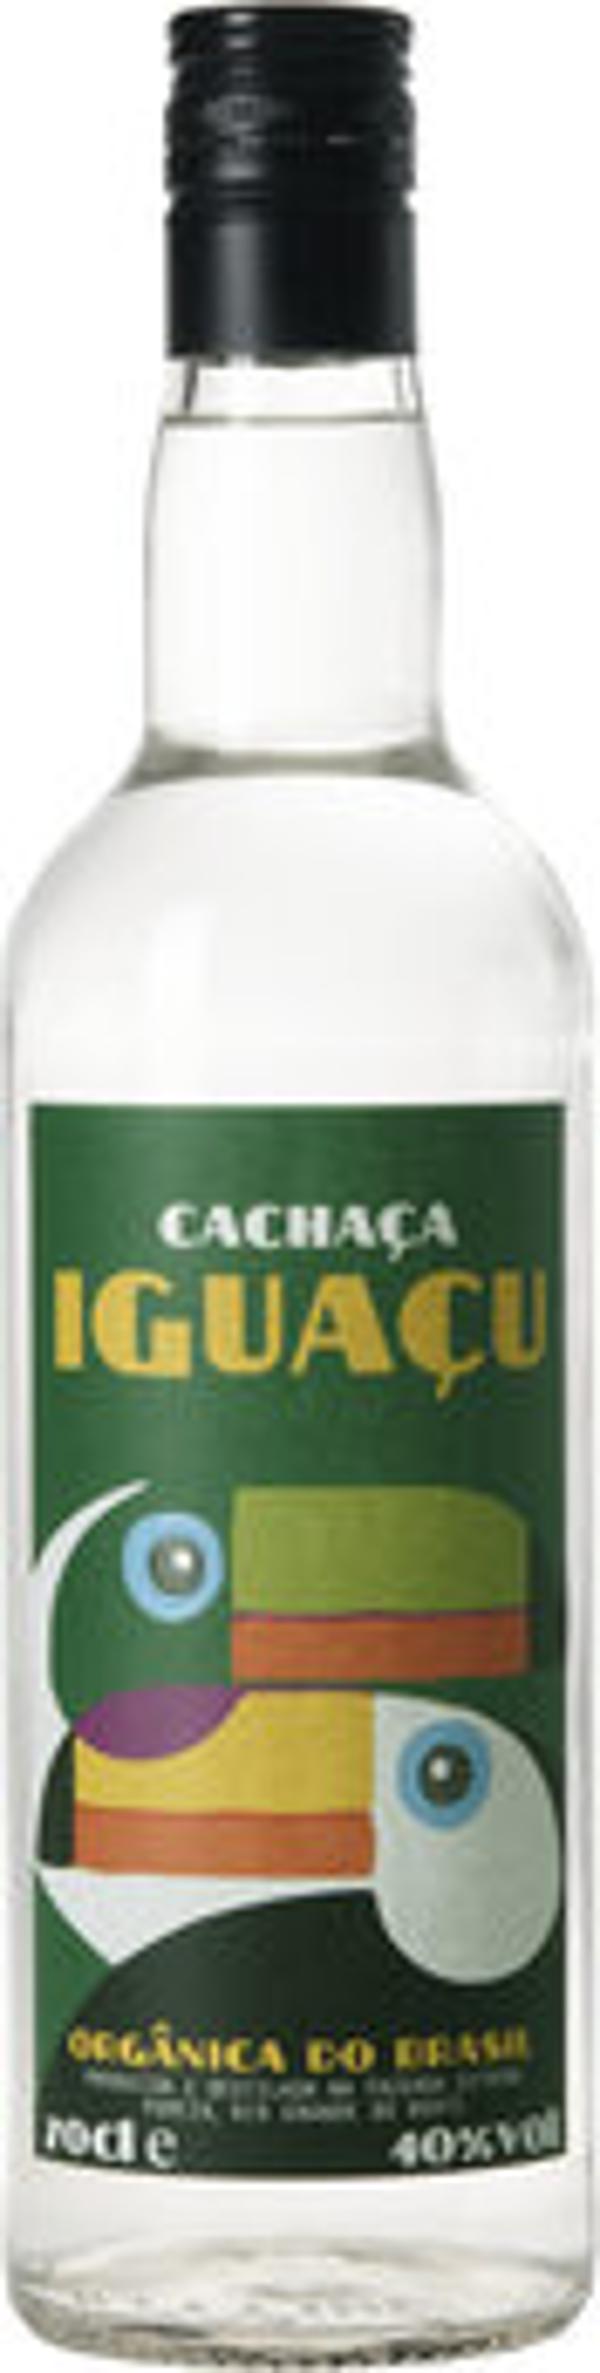 Produktfoto zu Iguaçu Bio Cachaça